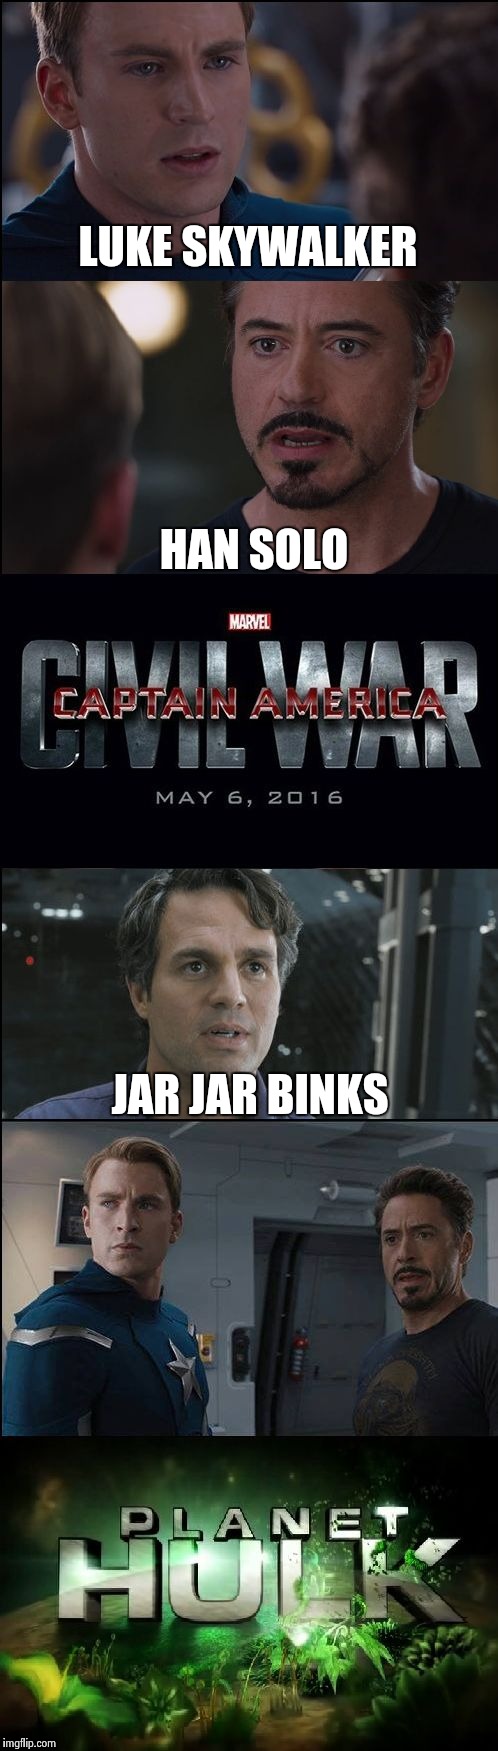 Civil War/Planet Hulk | LUKE SKYWALKER; HAN SOLO; JAR JAR BINKS | image tagged in civil war/planet hulk | made w/ Imgflip meme maker